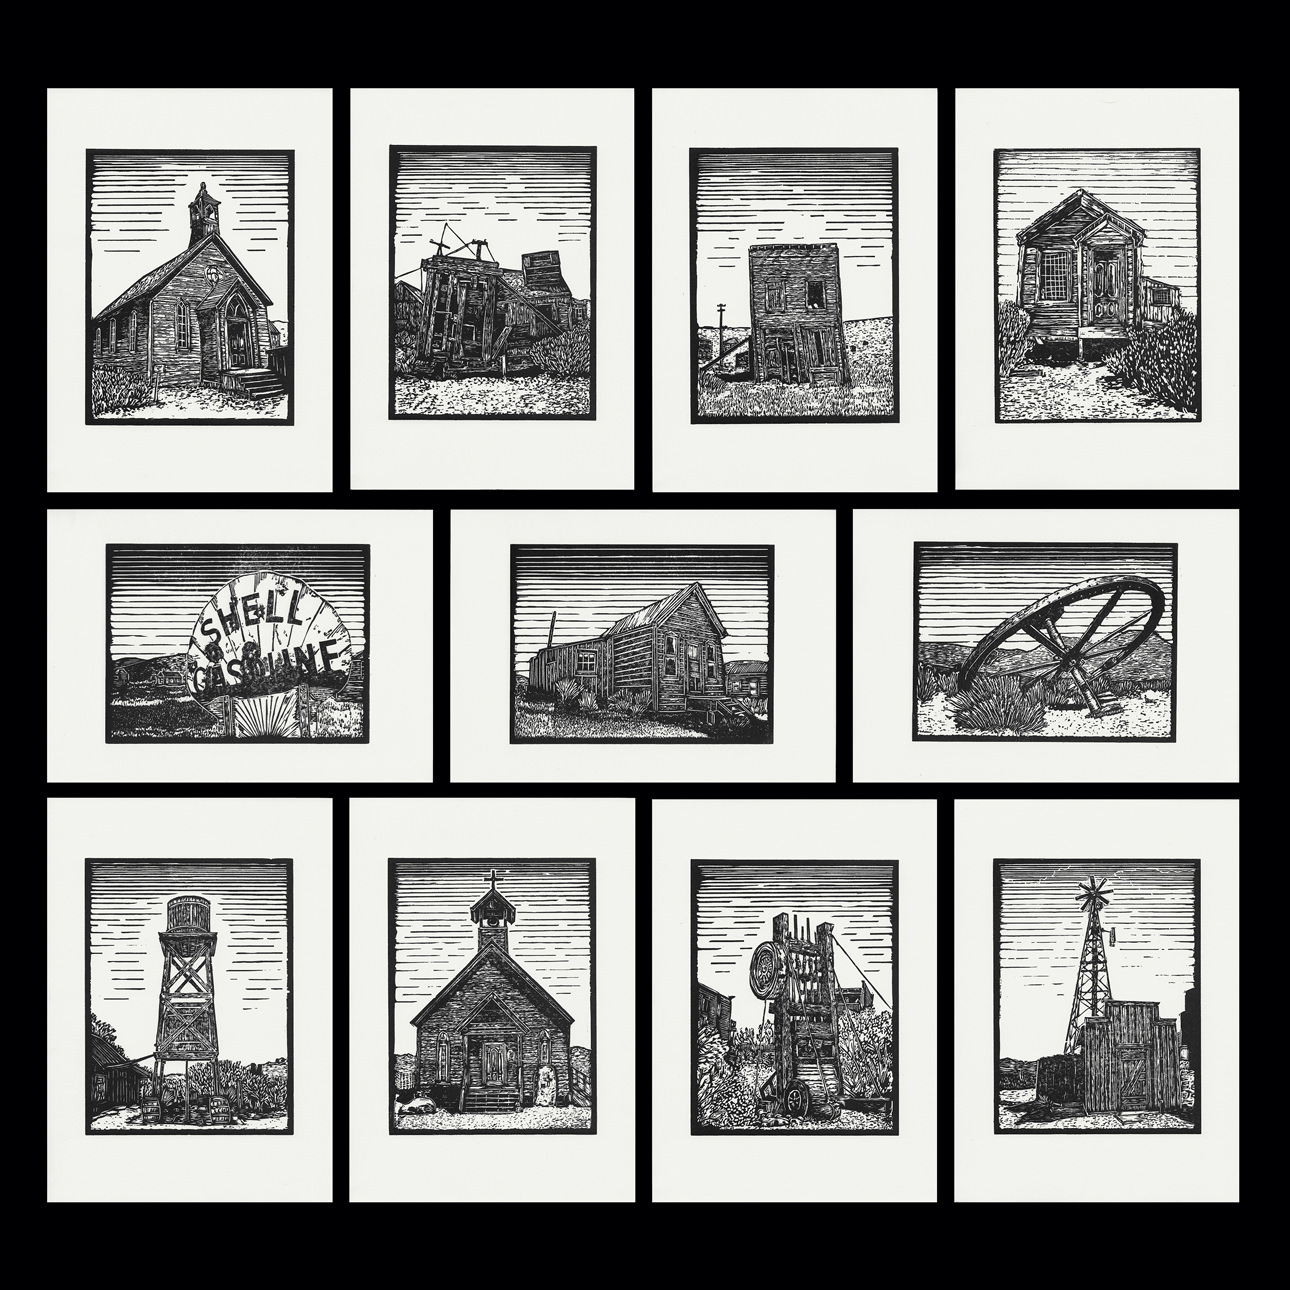 The Inkery's ghost town linocut print series